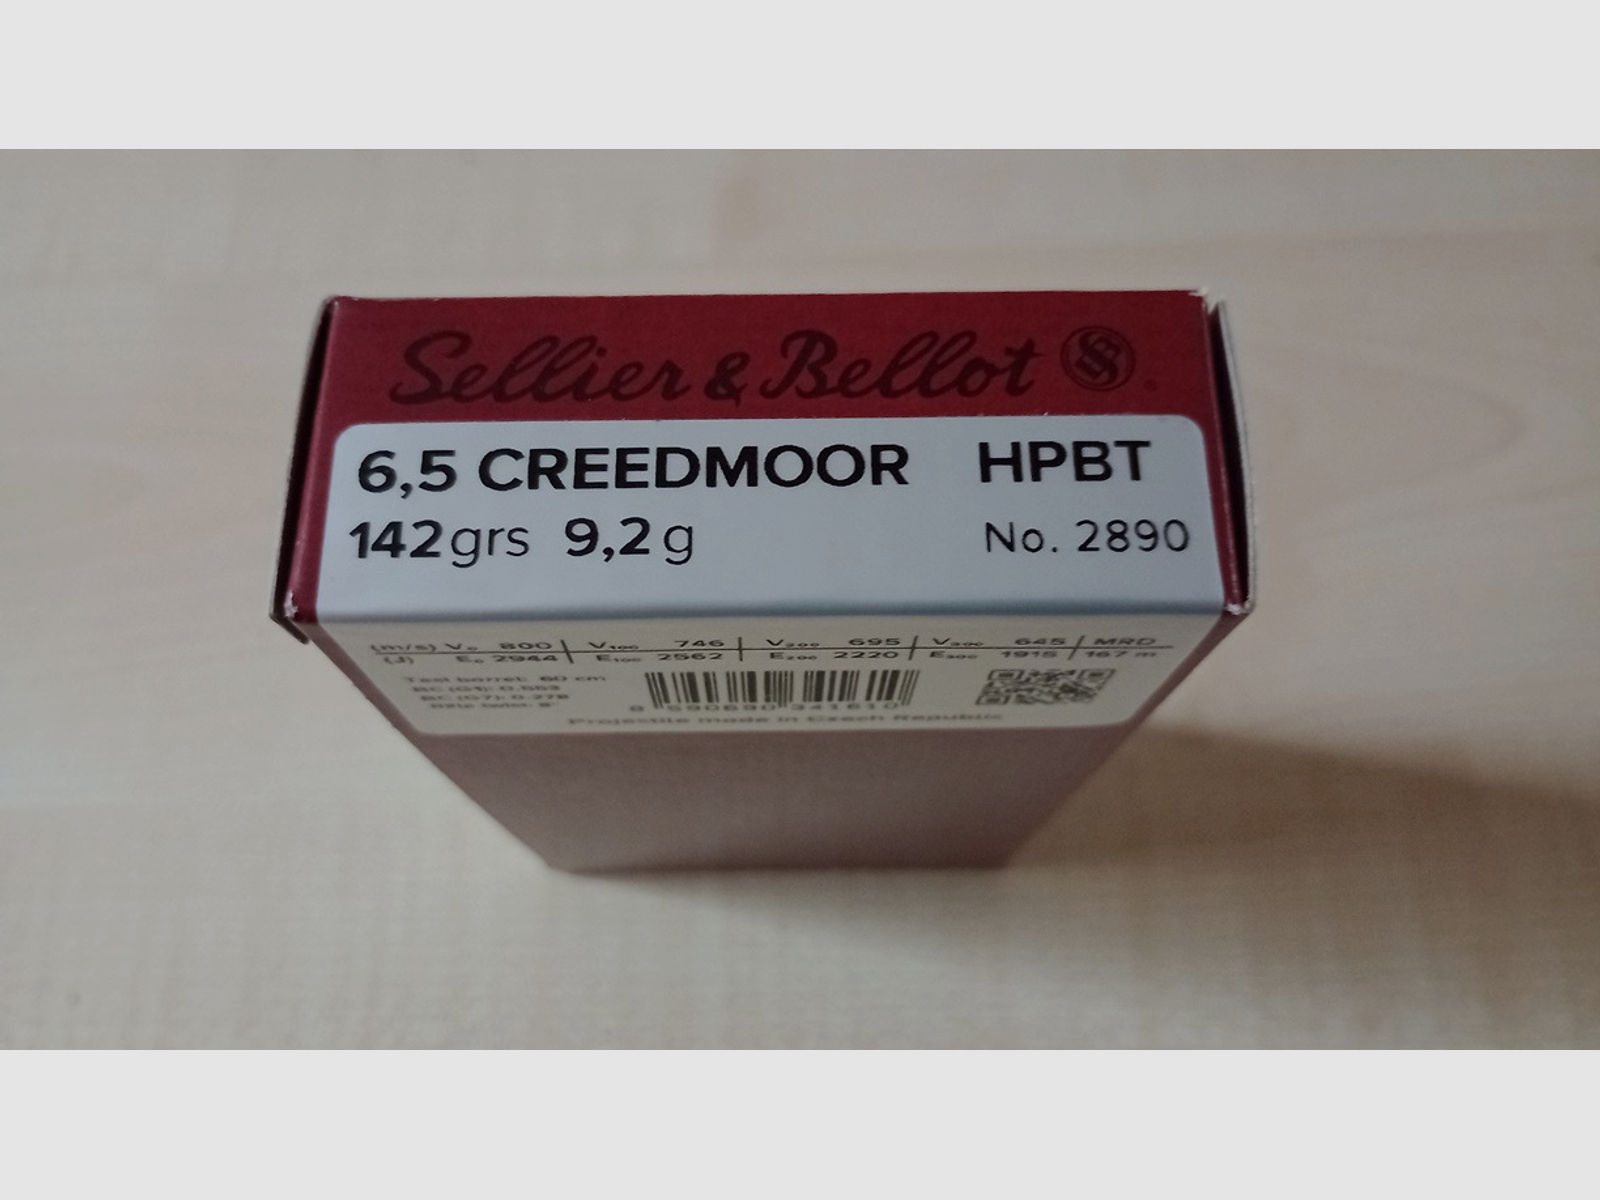 S&B Precison Rifle Ammunition  6,5 Creedmoor HPBT 142grs/9,2g  No. 2890 